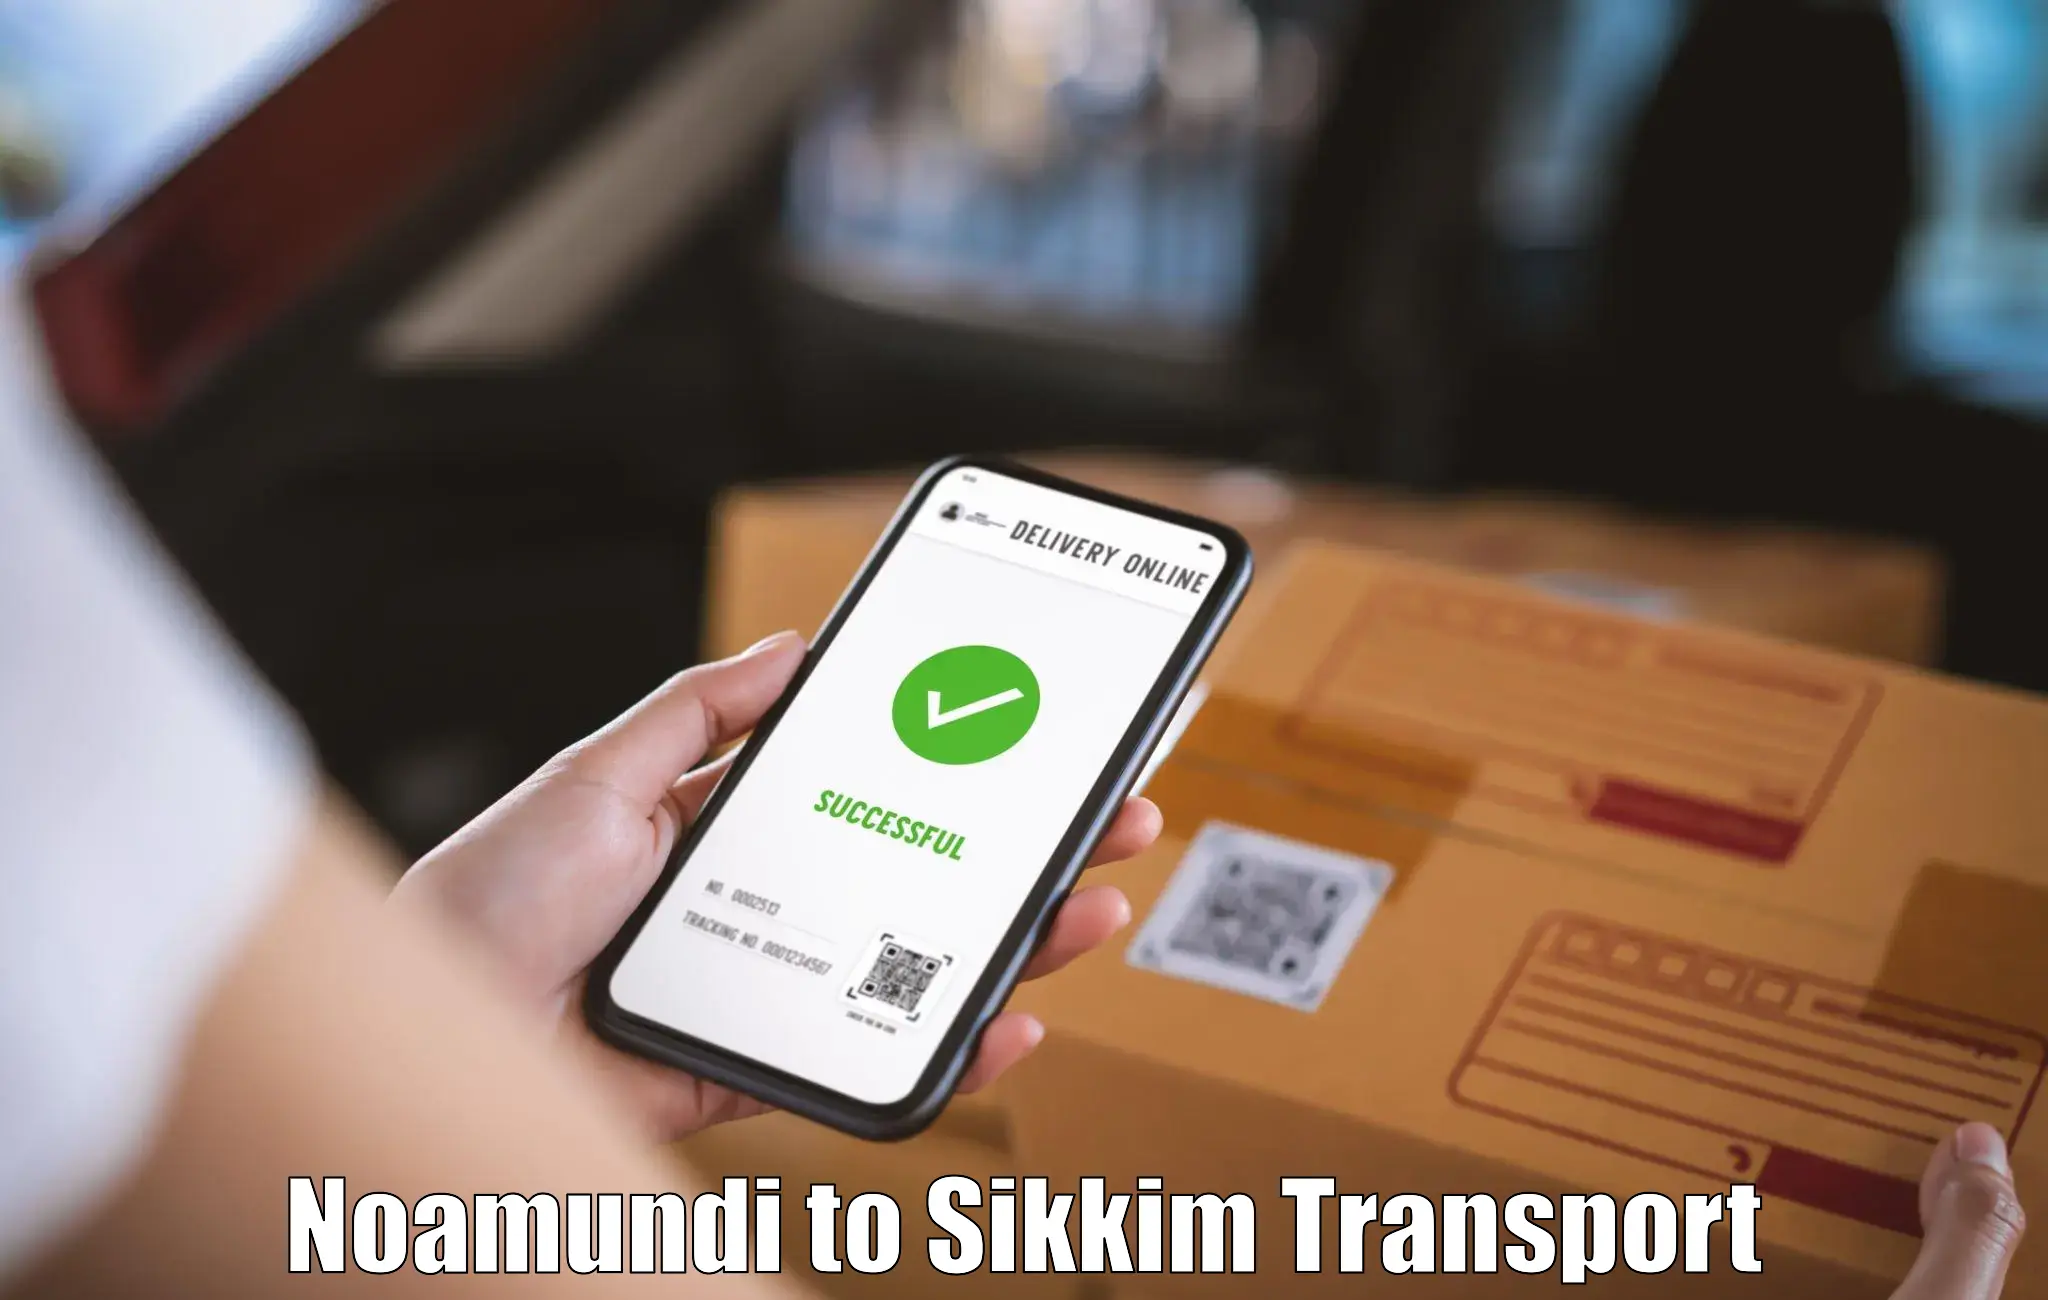 Transport in sharing Noamundi to South Sikkim